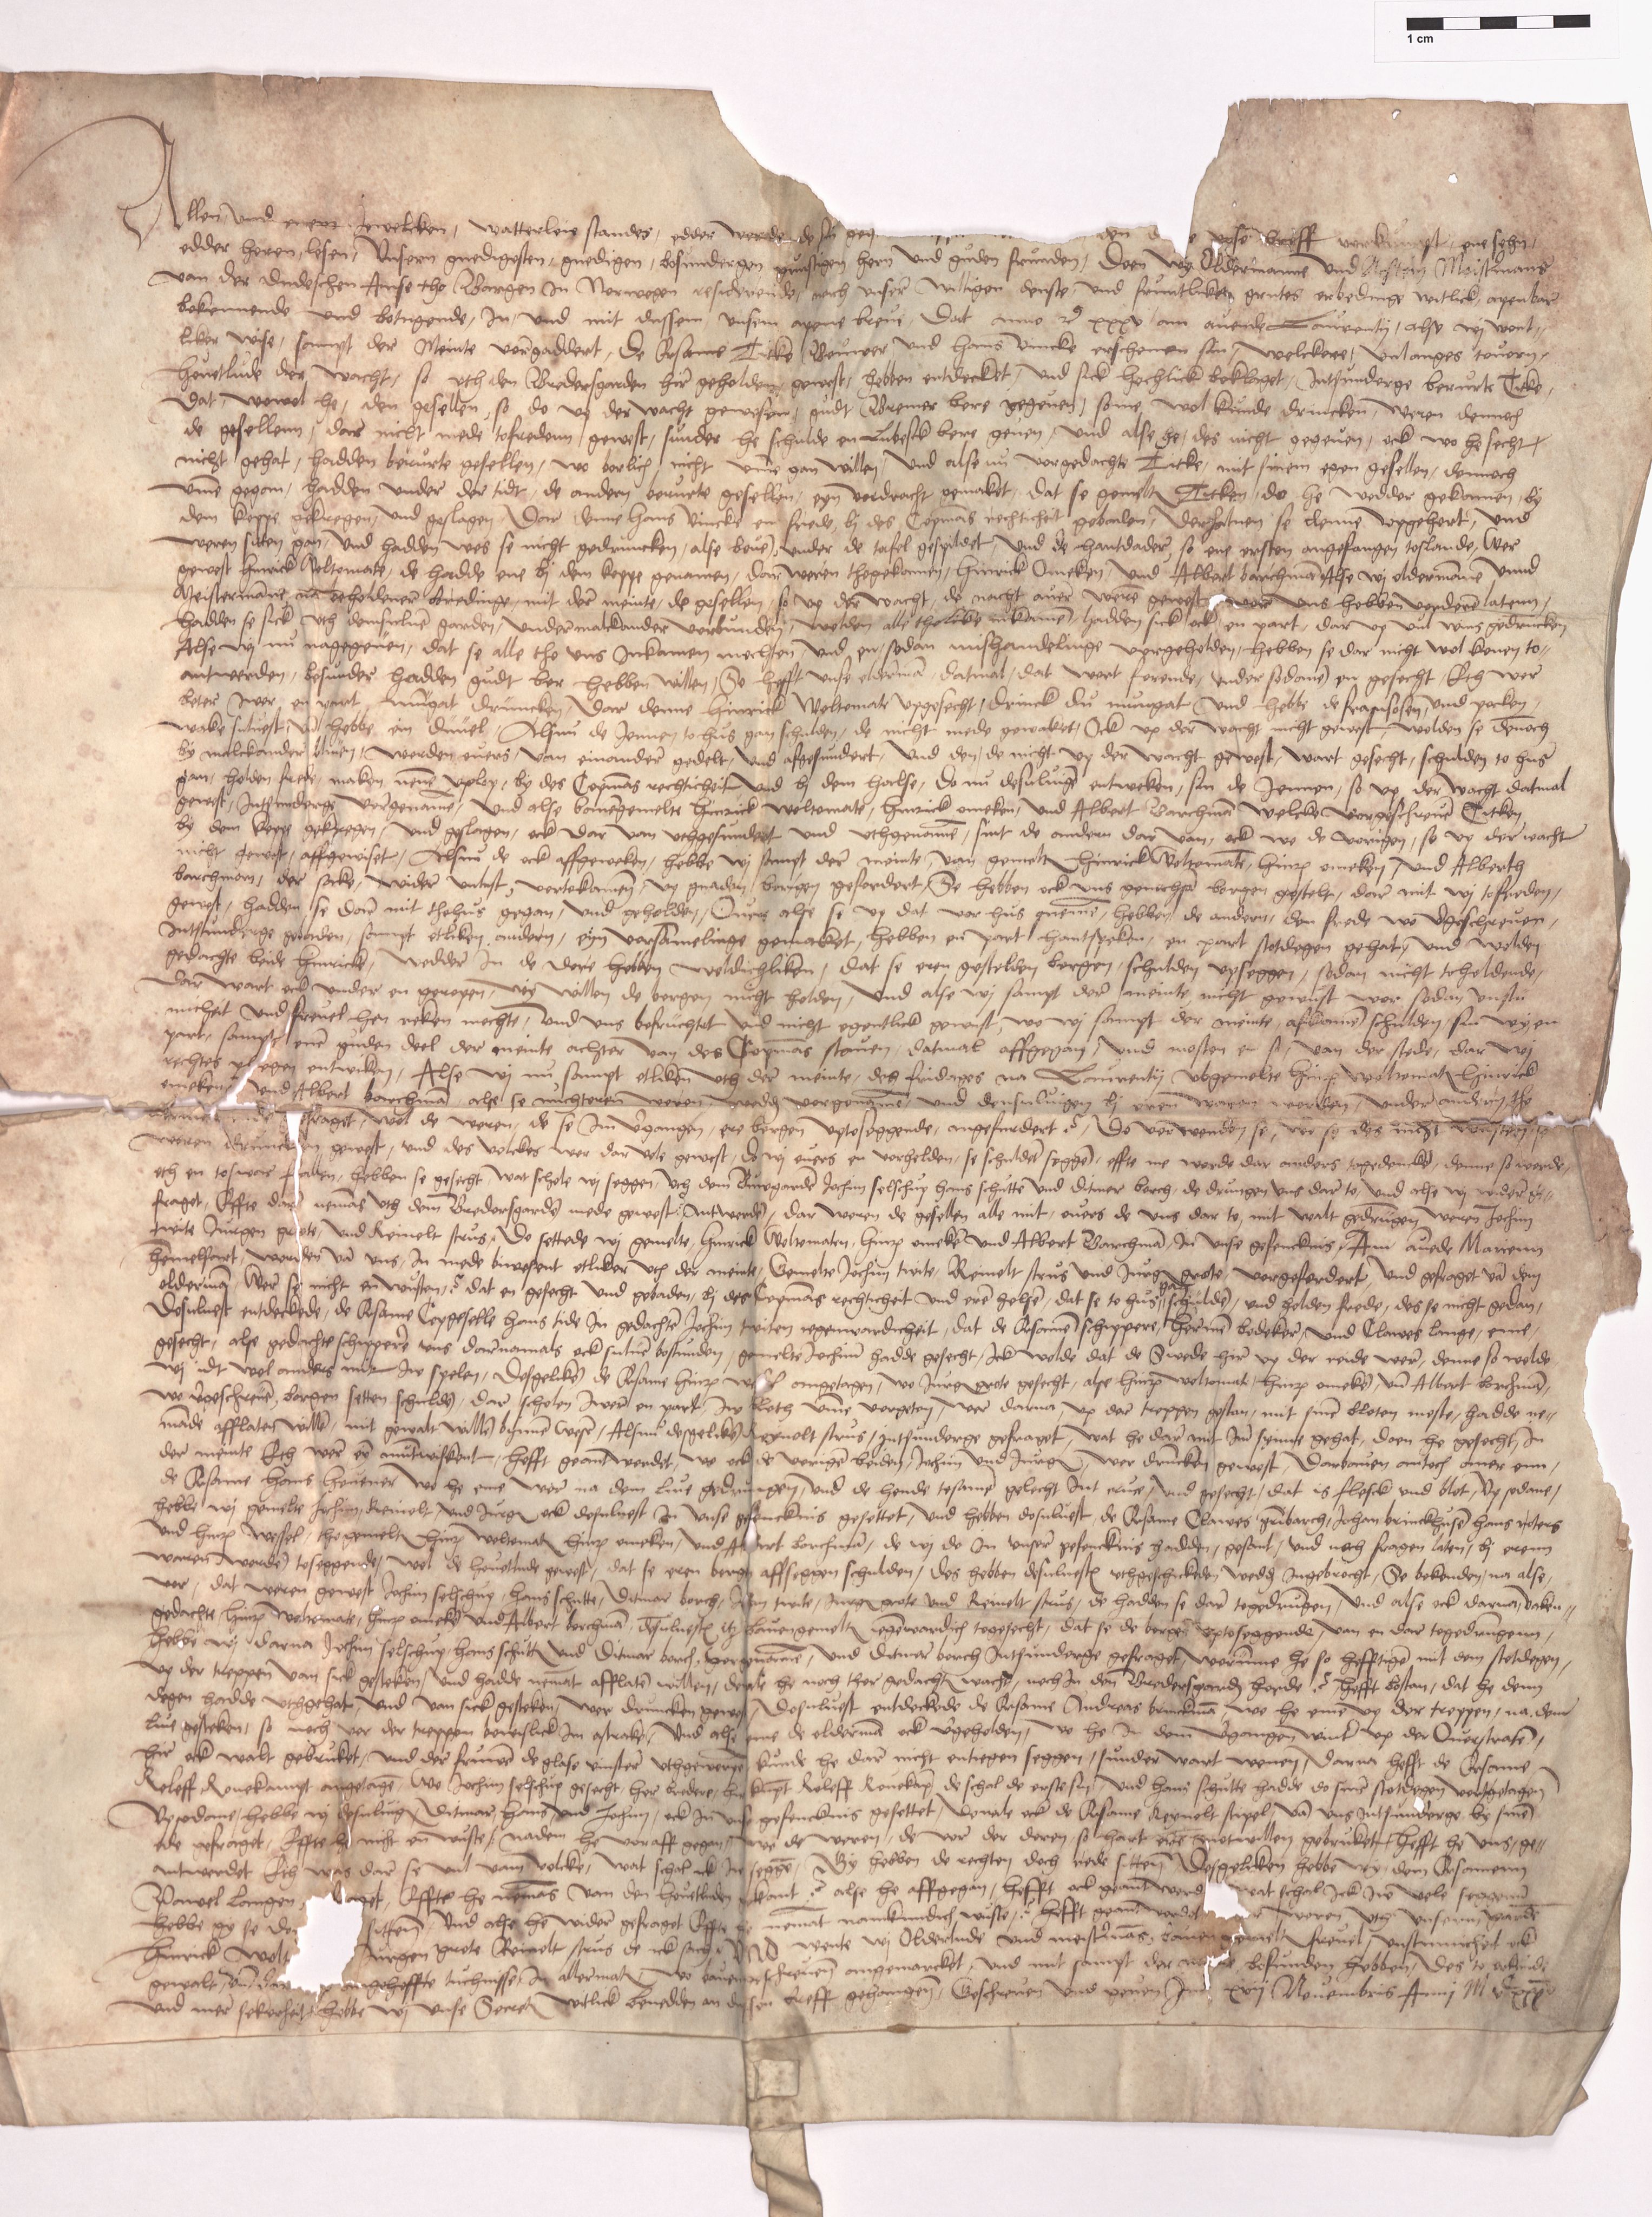 07.1 Urkunden, 3 Auswärtige Beziehungen (Externa), AHL/-/21: Norwegen (Norvagica); Kontor zu Bergen, 1247-1747, s. 1124